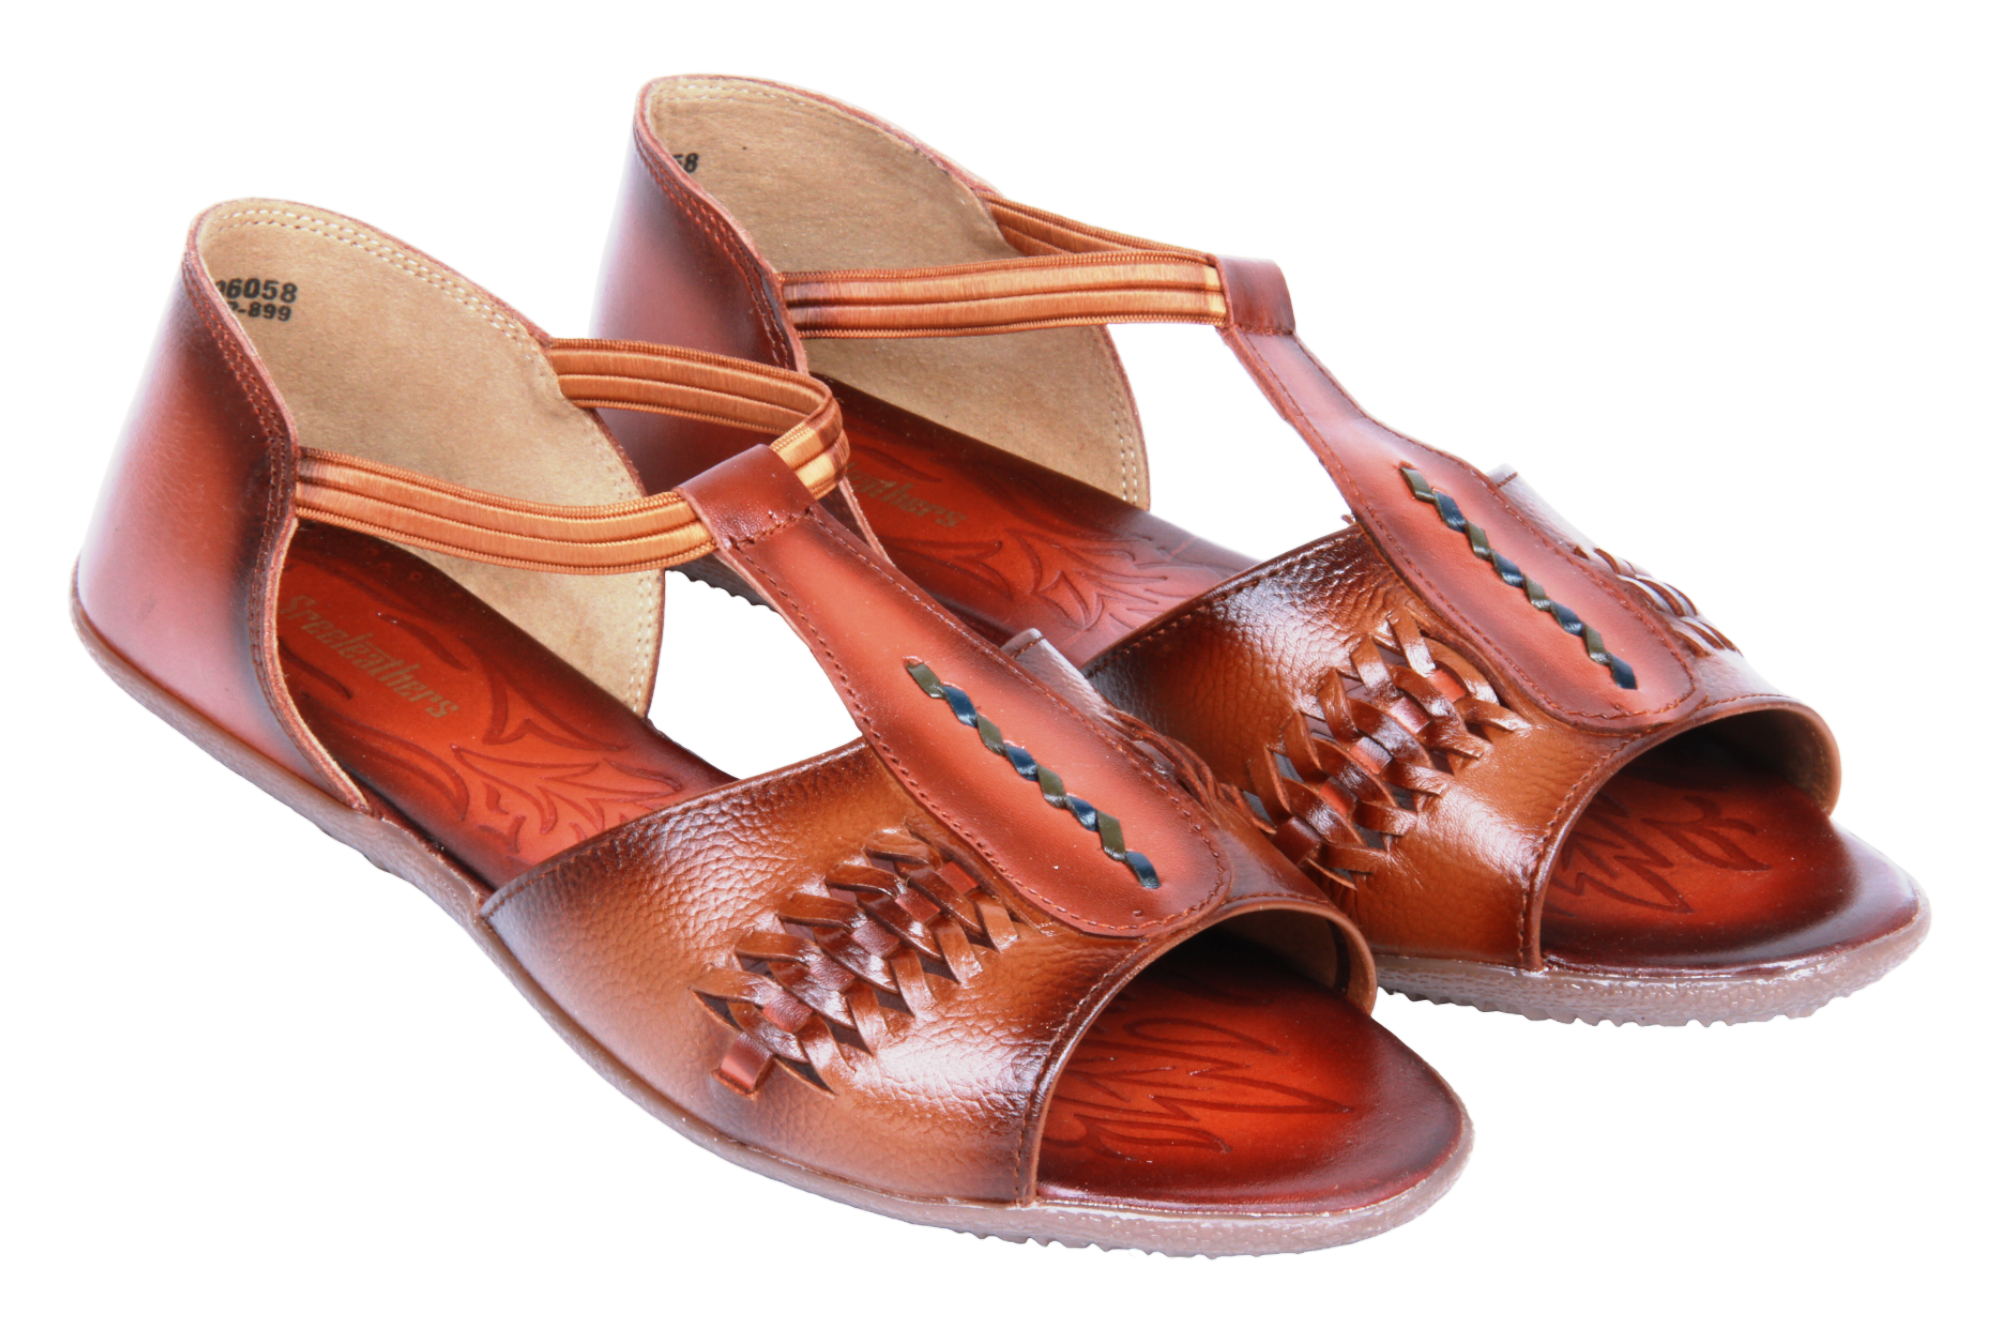 17 Best Sandals To Buy This Summer - Summer Sandals